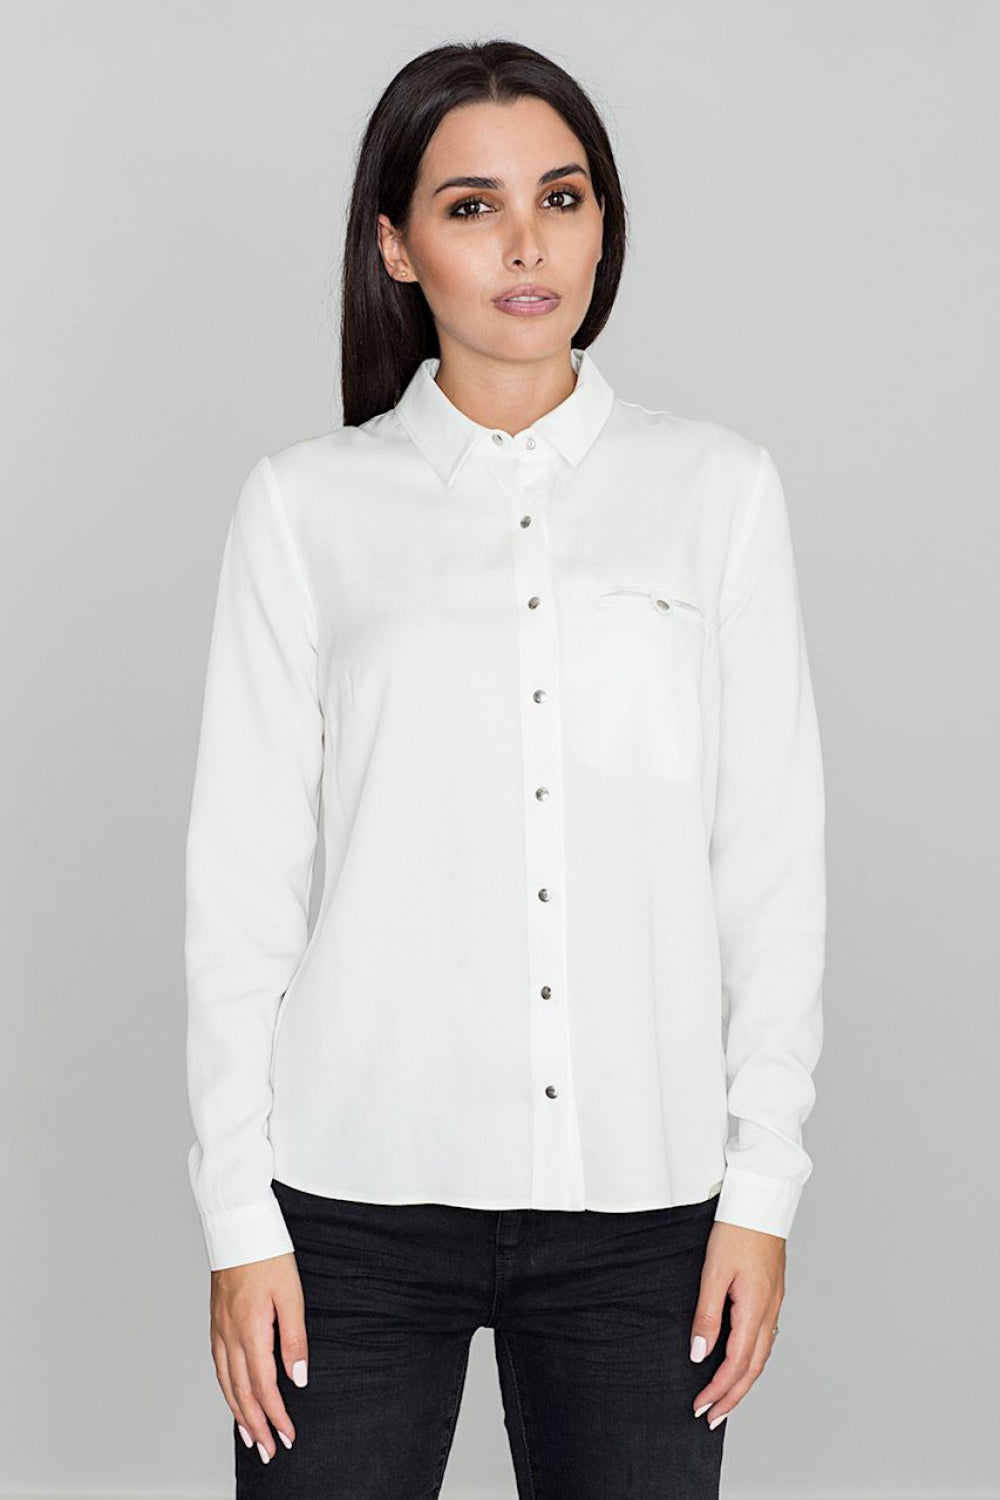 Women's Long sleeve shirt model 111029 - Ladies Casual Spring / Summer Top - White Color (Ecru tone)